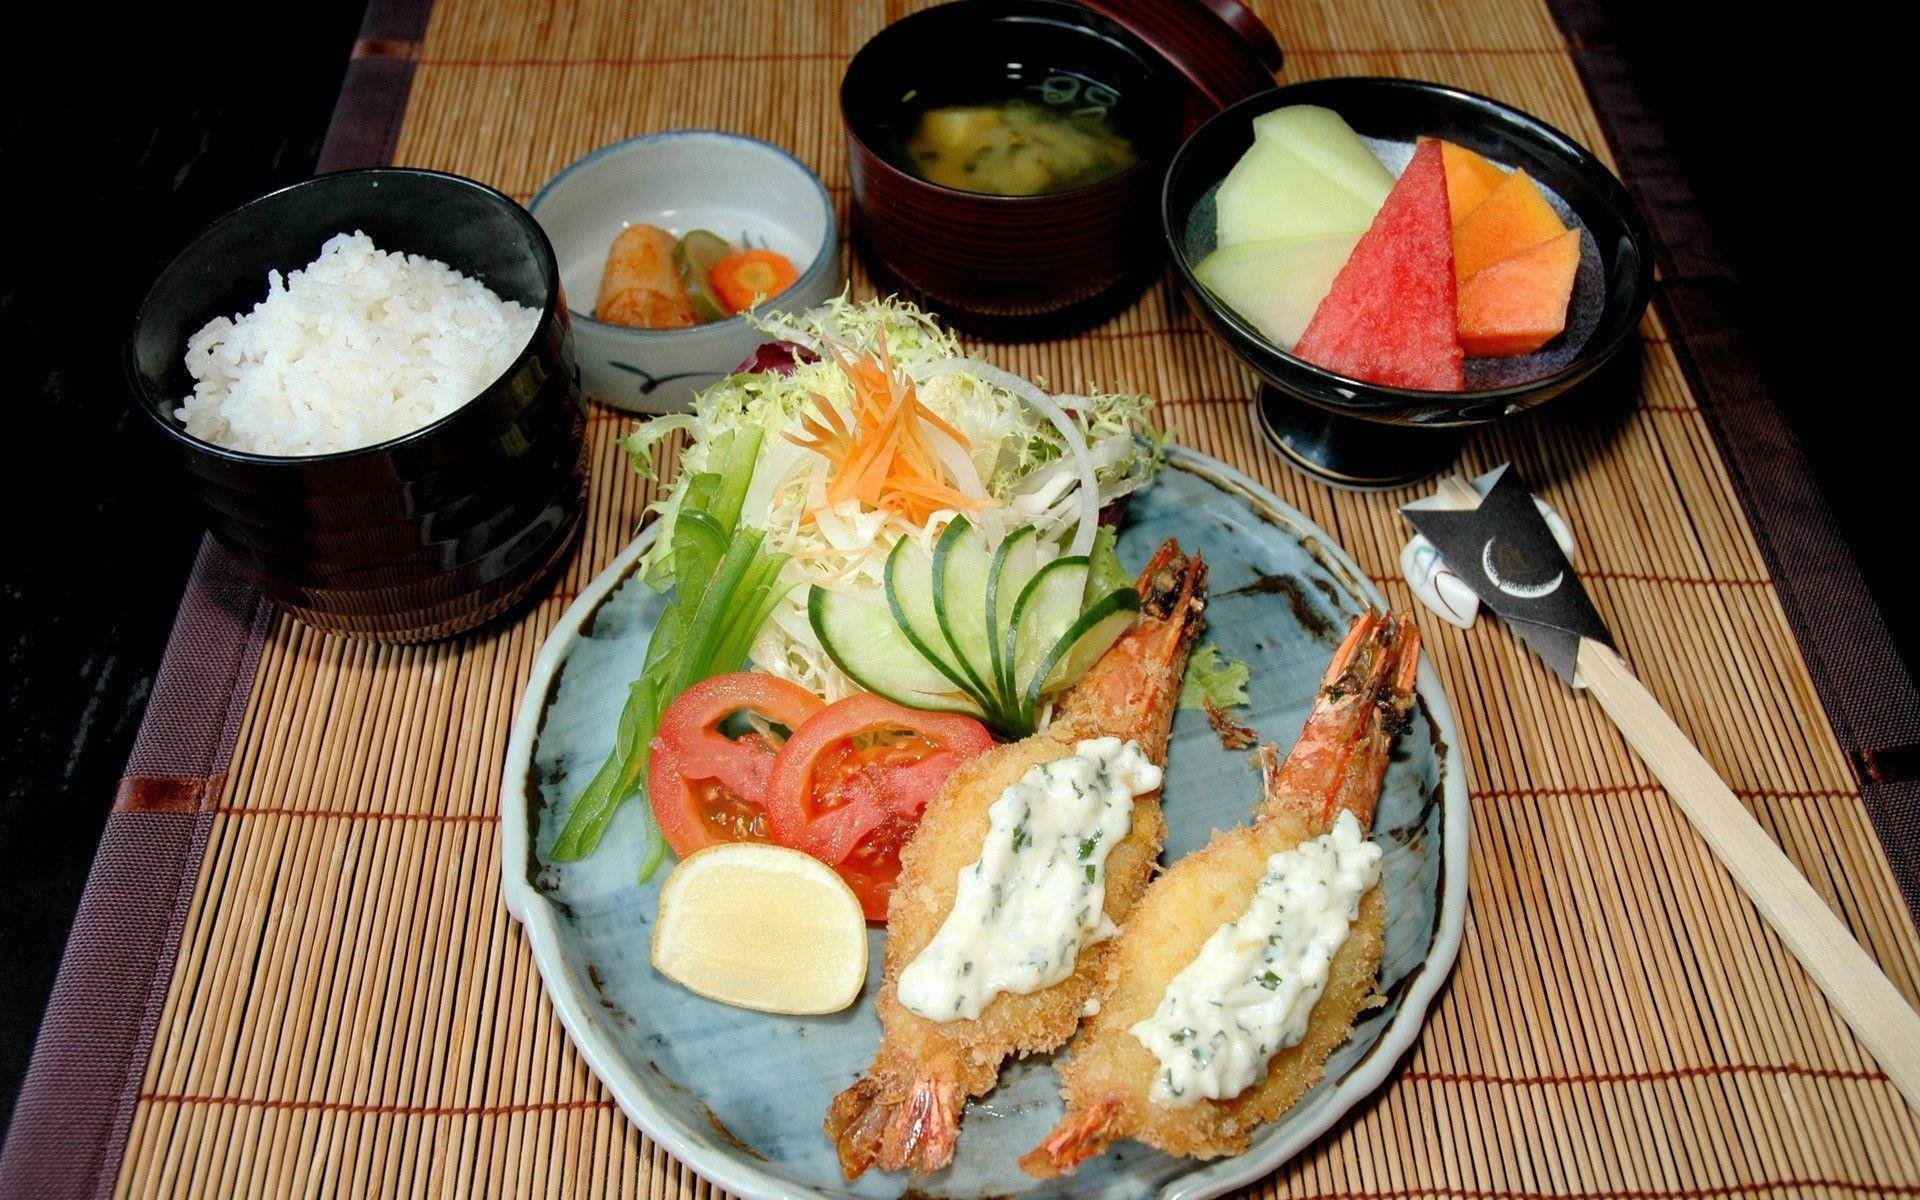 Savory Japanese Lunch Feast - Crispy Tempura And Fresh Veggies